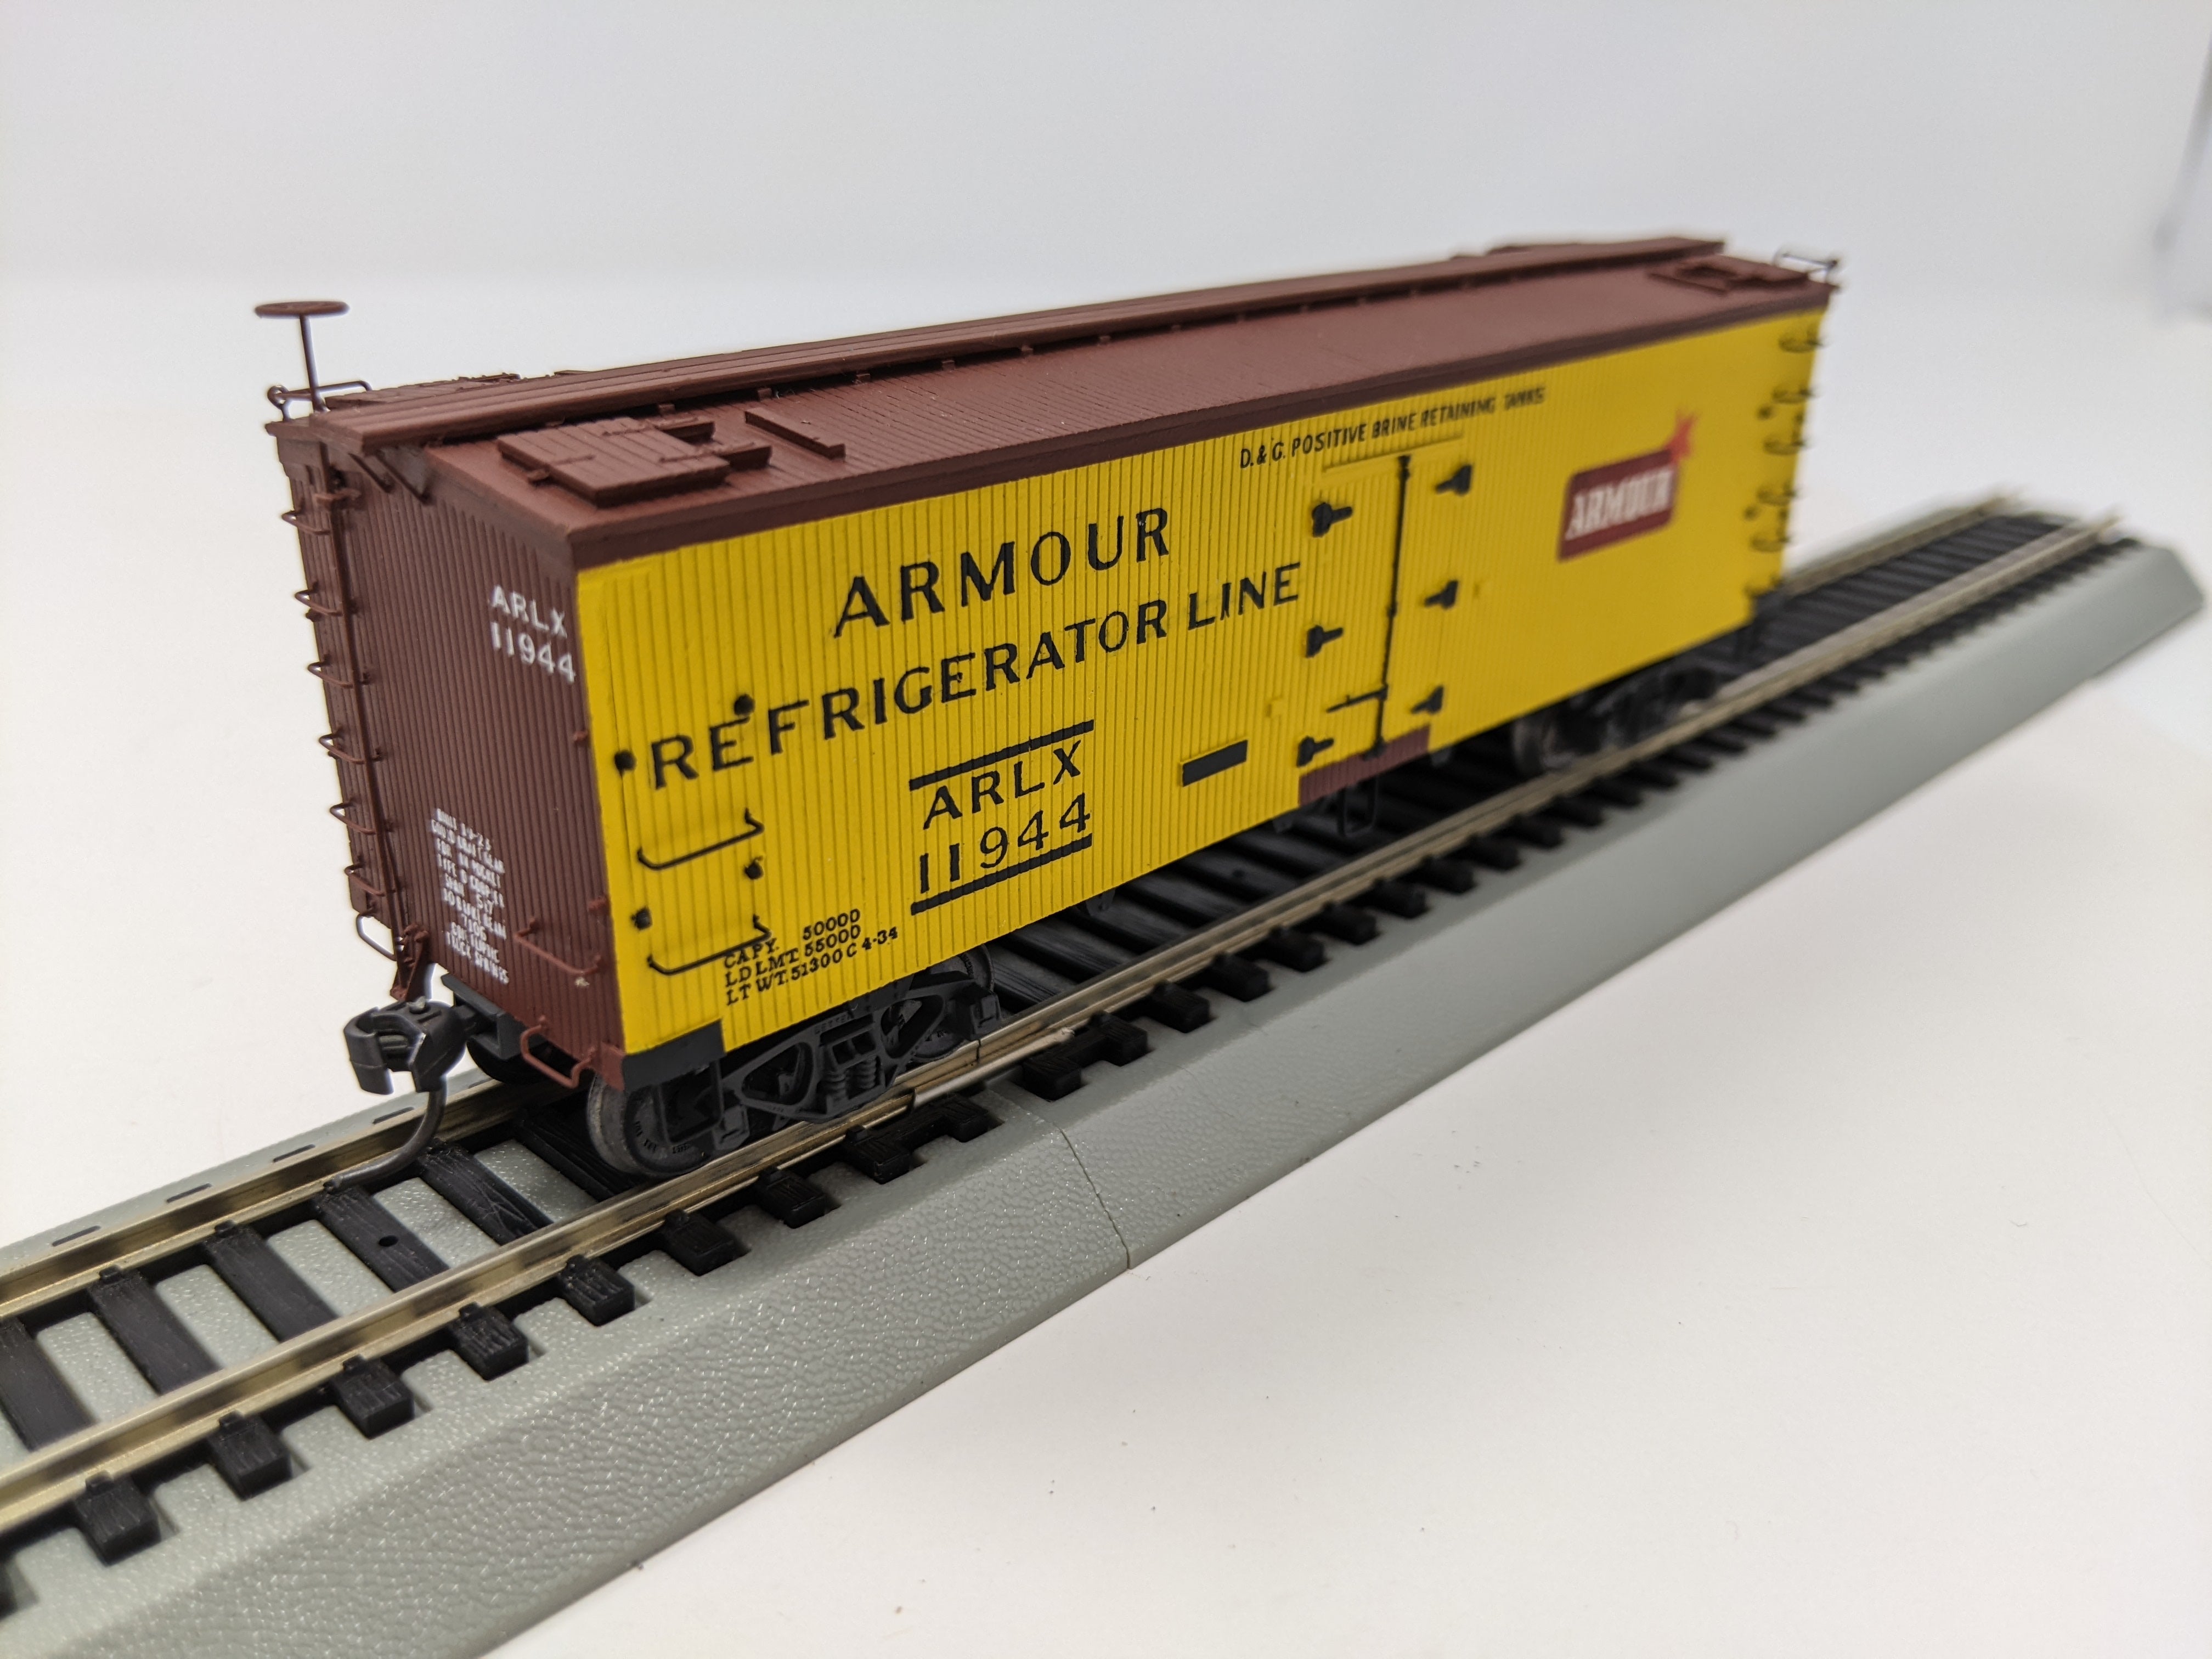 USED HO Scale, 38' Wooden Reefer Box Car, Armour Refrigerator Line ARLX #11944, Custom, Read Description